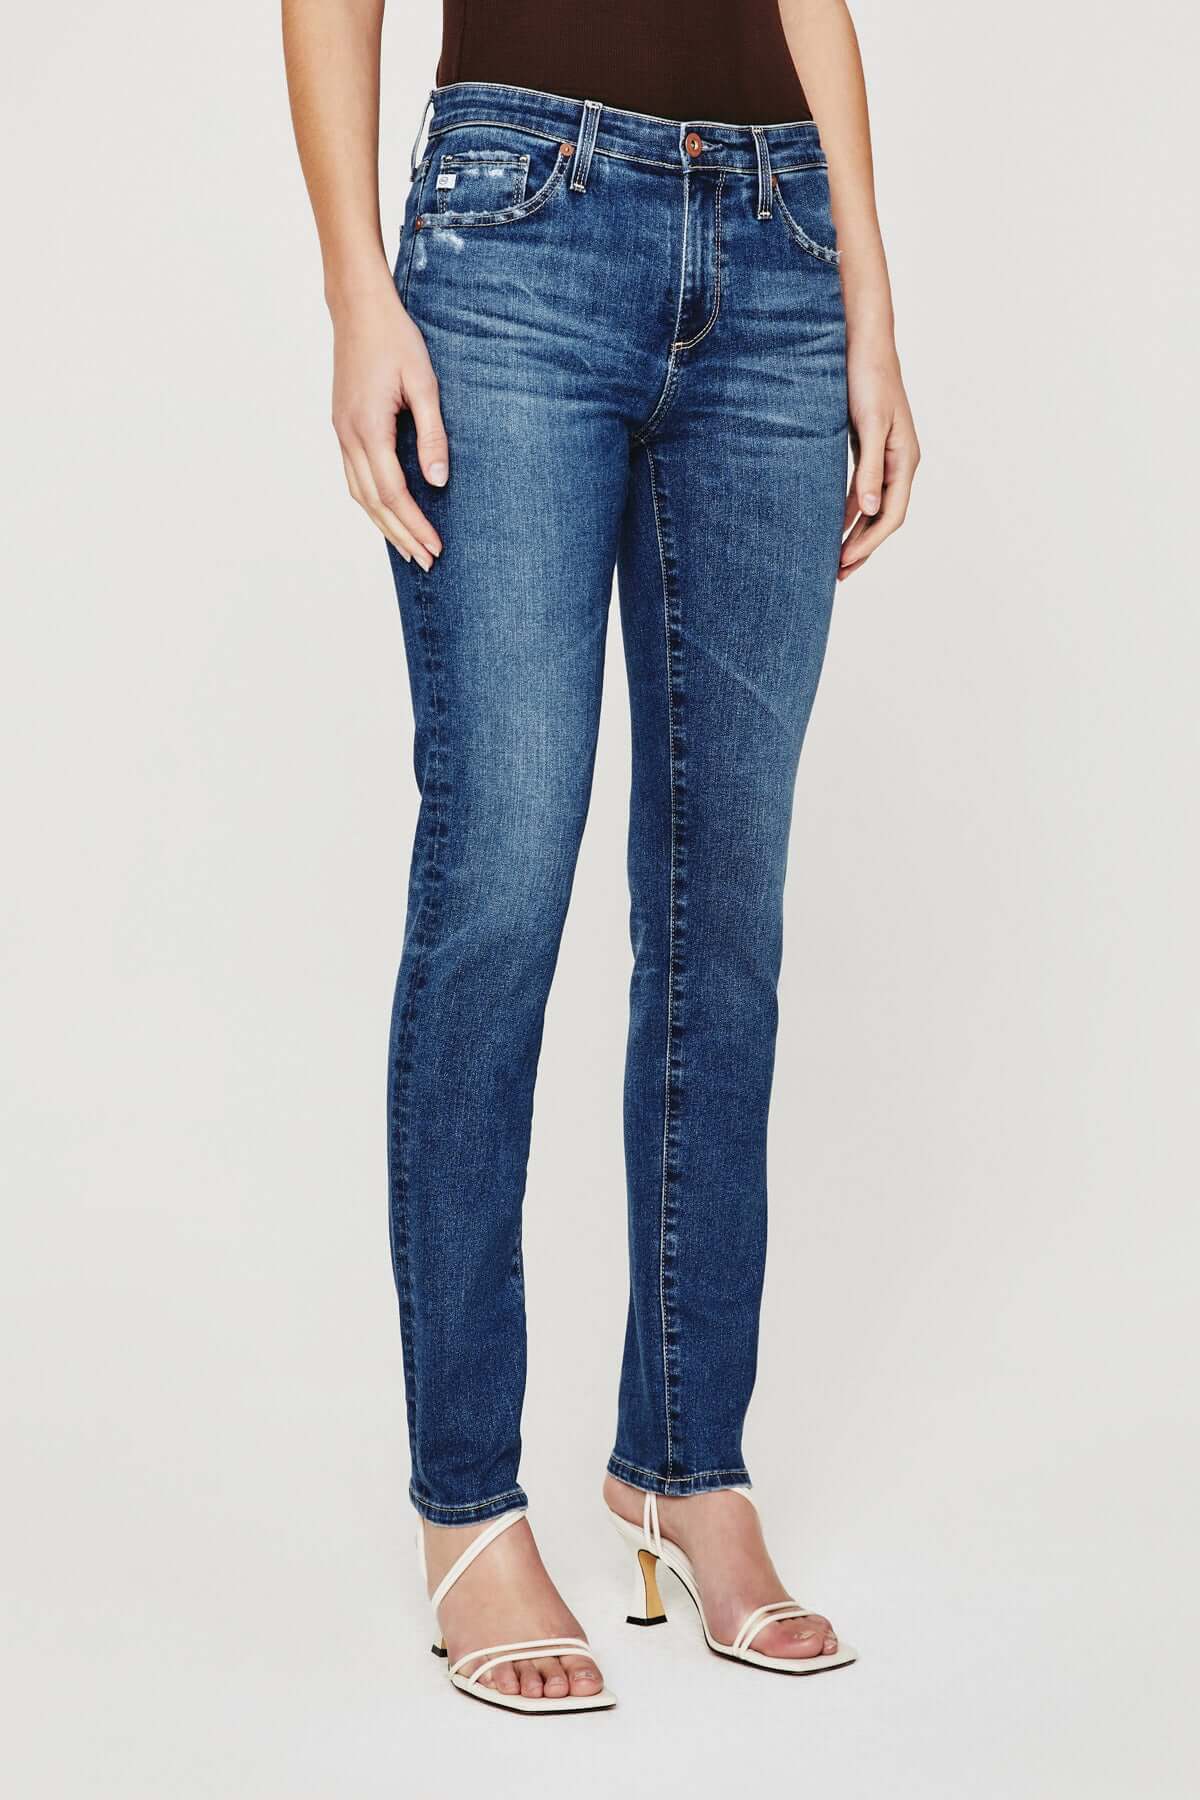 AG Jeans Long Inseam 5-Years | Women's Premium Denim | Straight-Leg